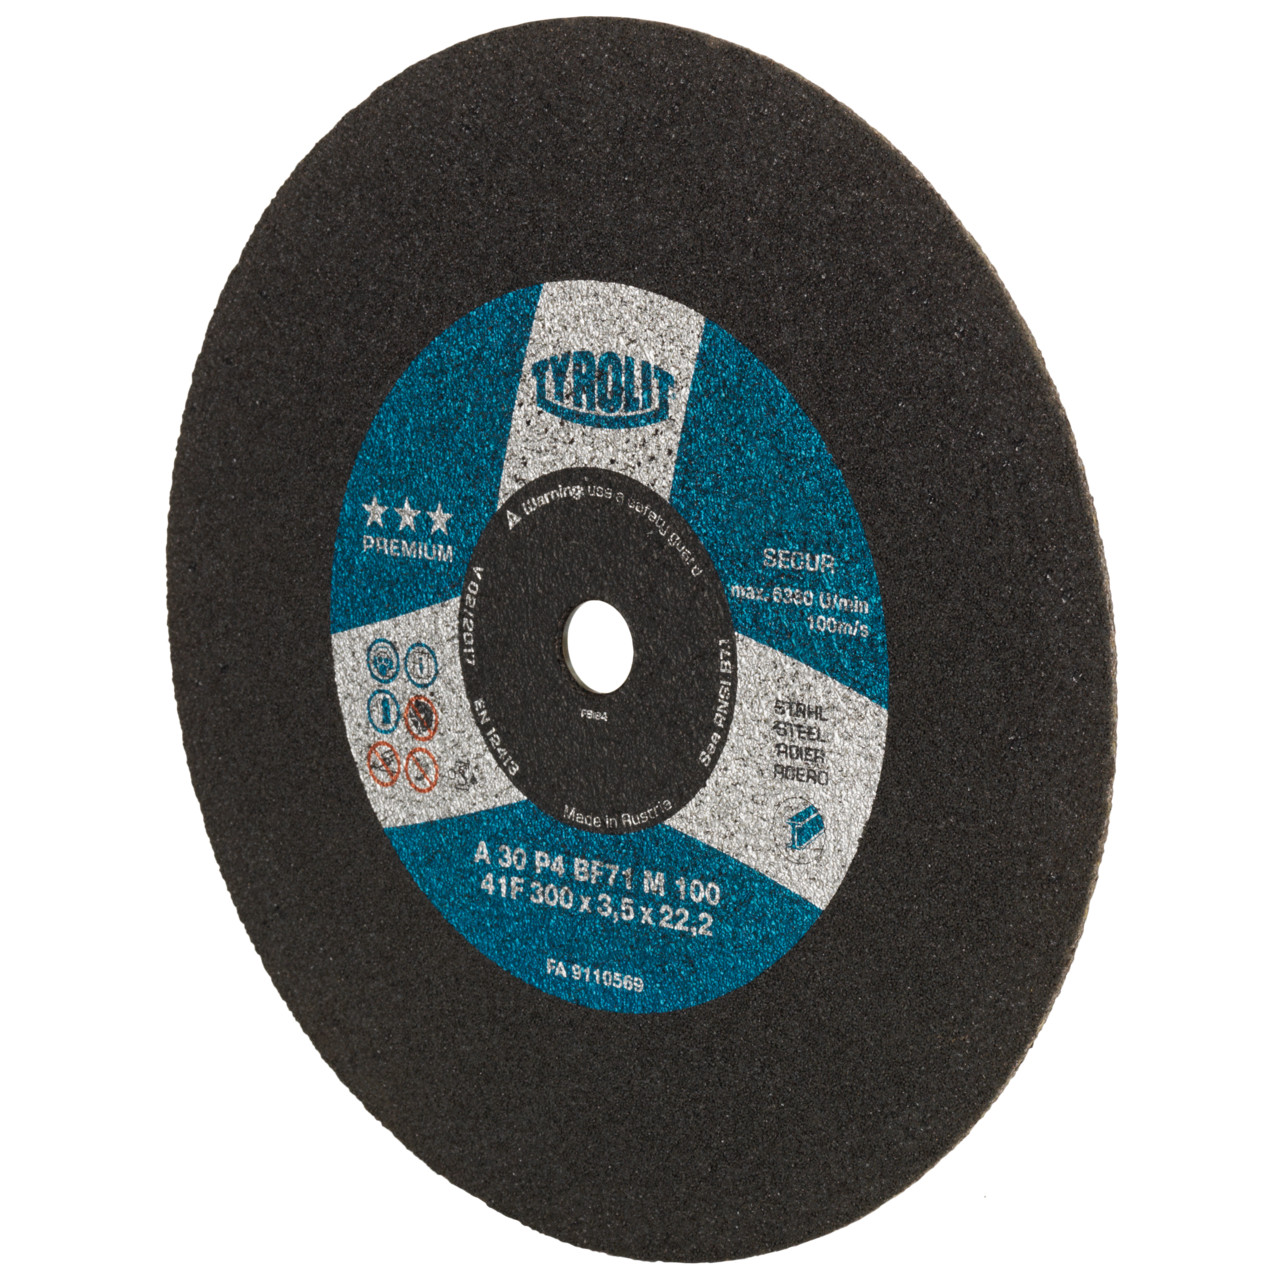 Tyrolit Cutting discs DxDxH 300x3.5x32 For steel, shape: 41 - straight version, Art. 151301